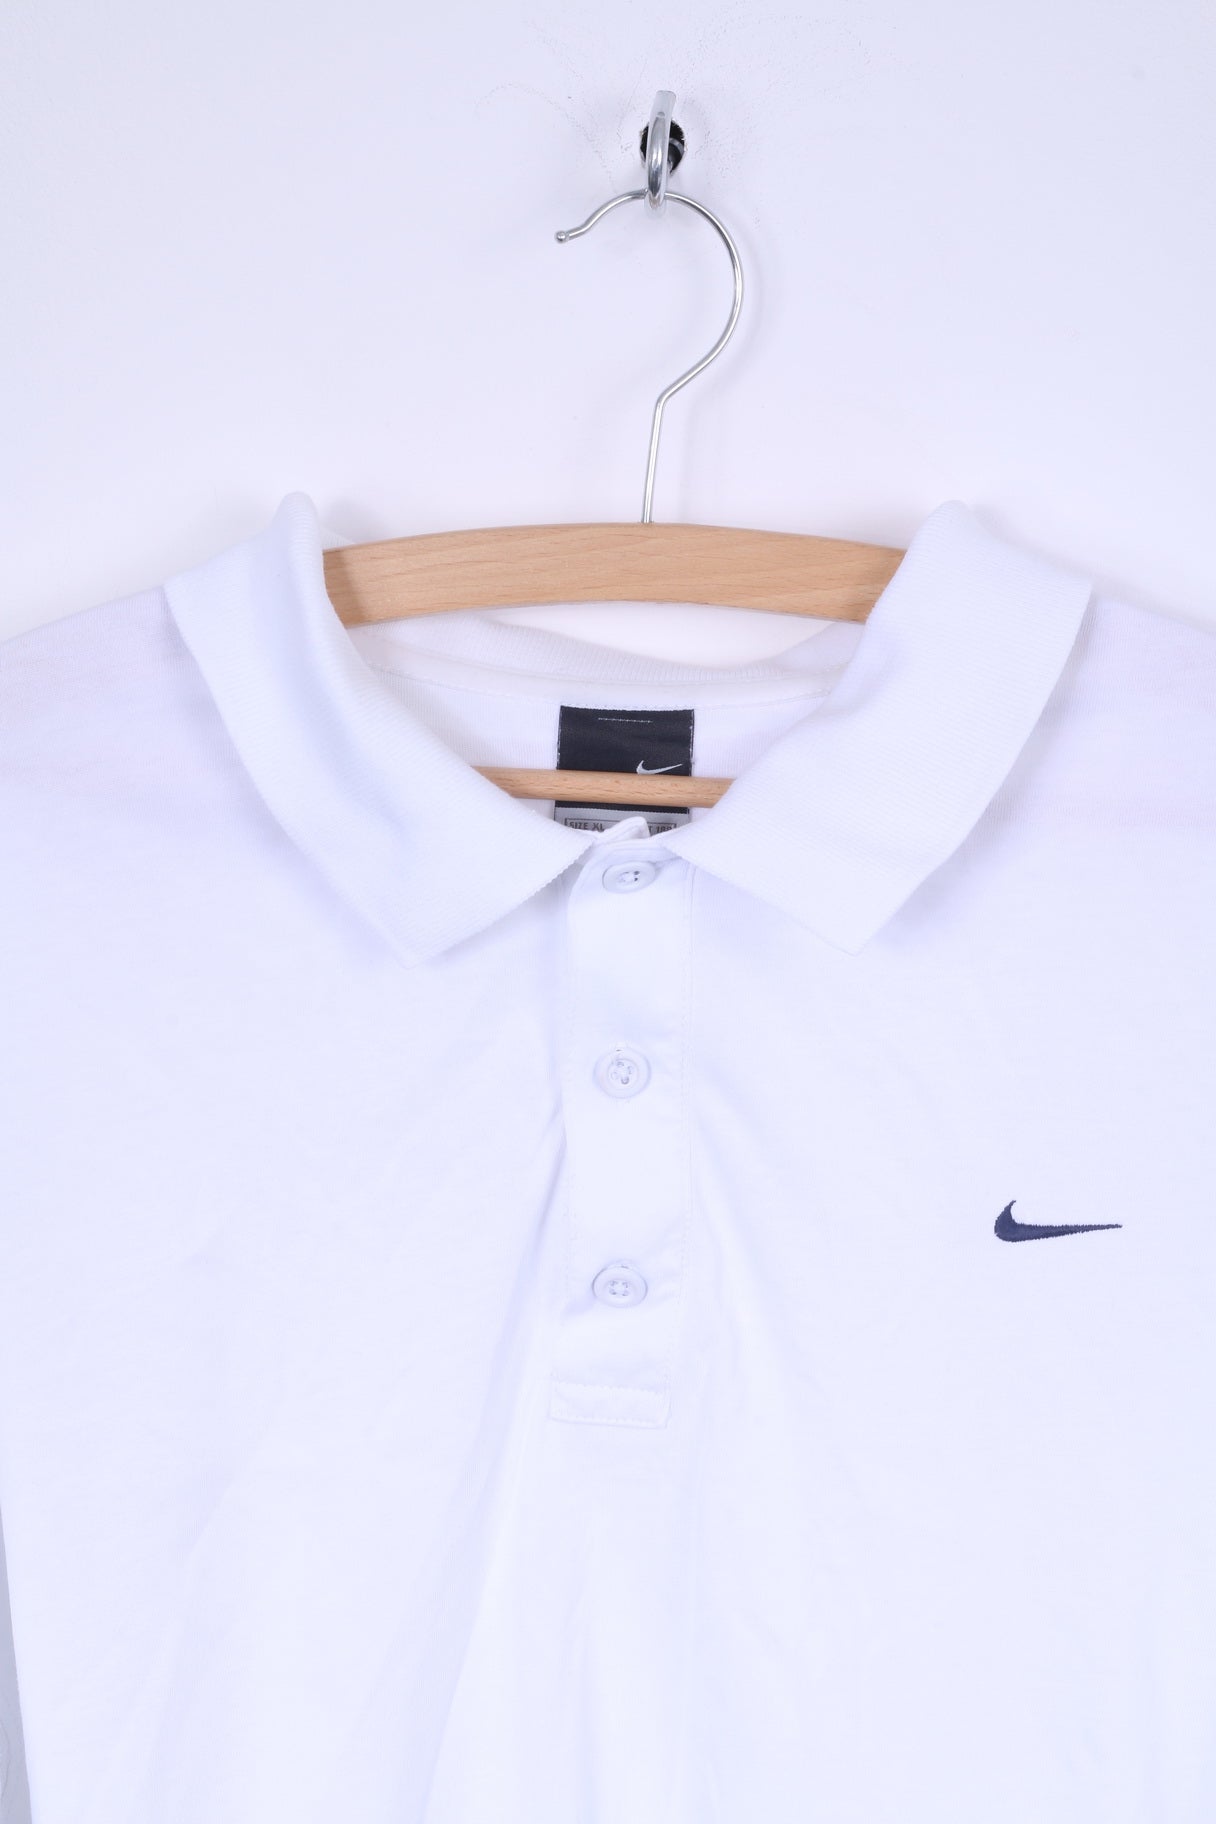 Nike Polo XL 188 Homme Blanc Coton Dri-Fit Sport Training